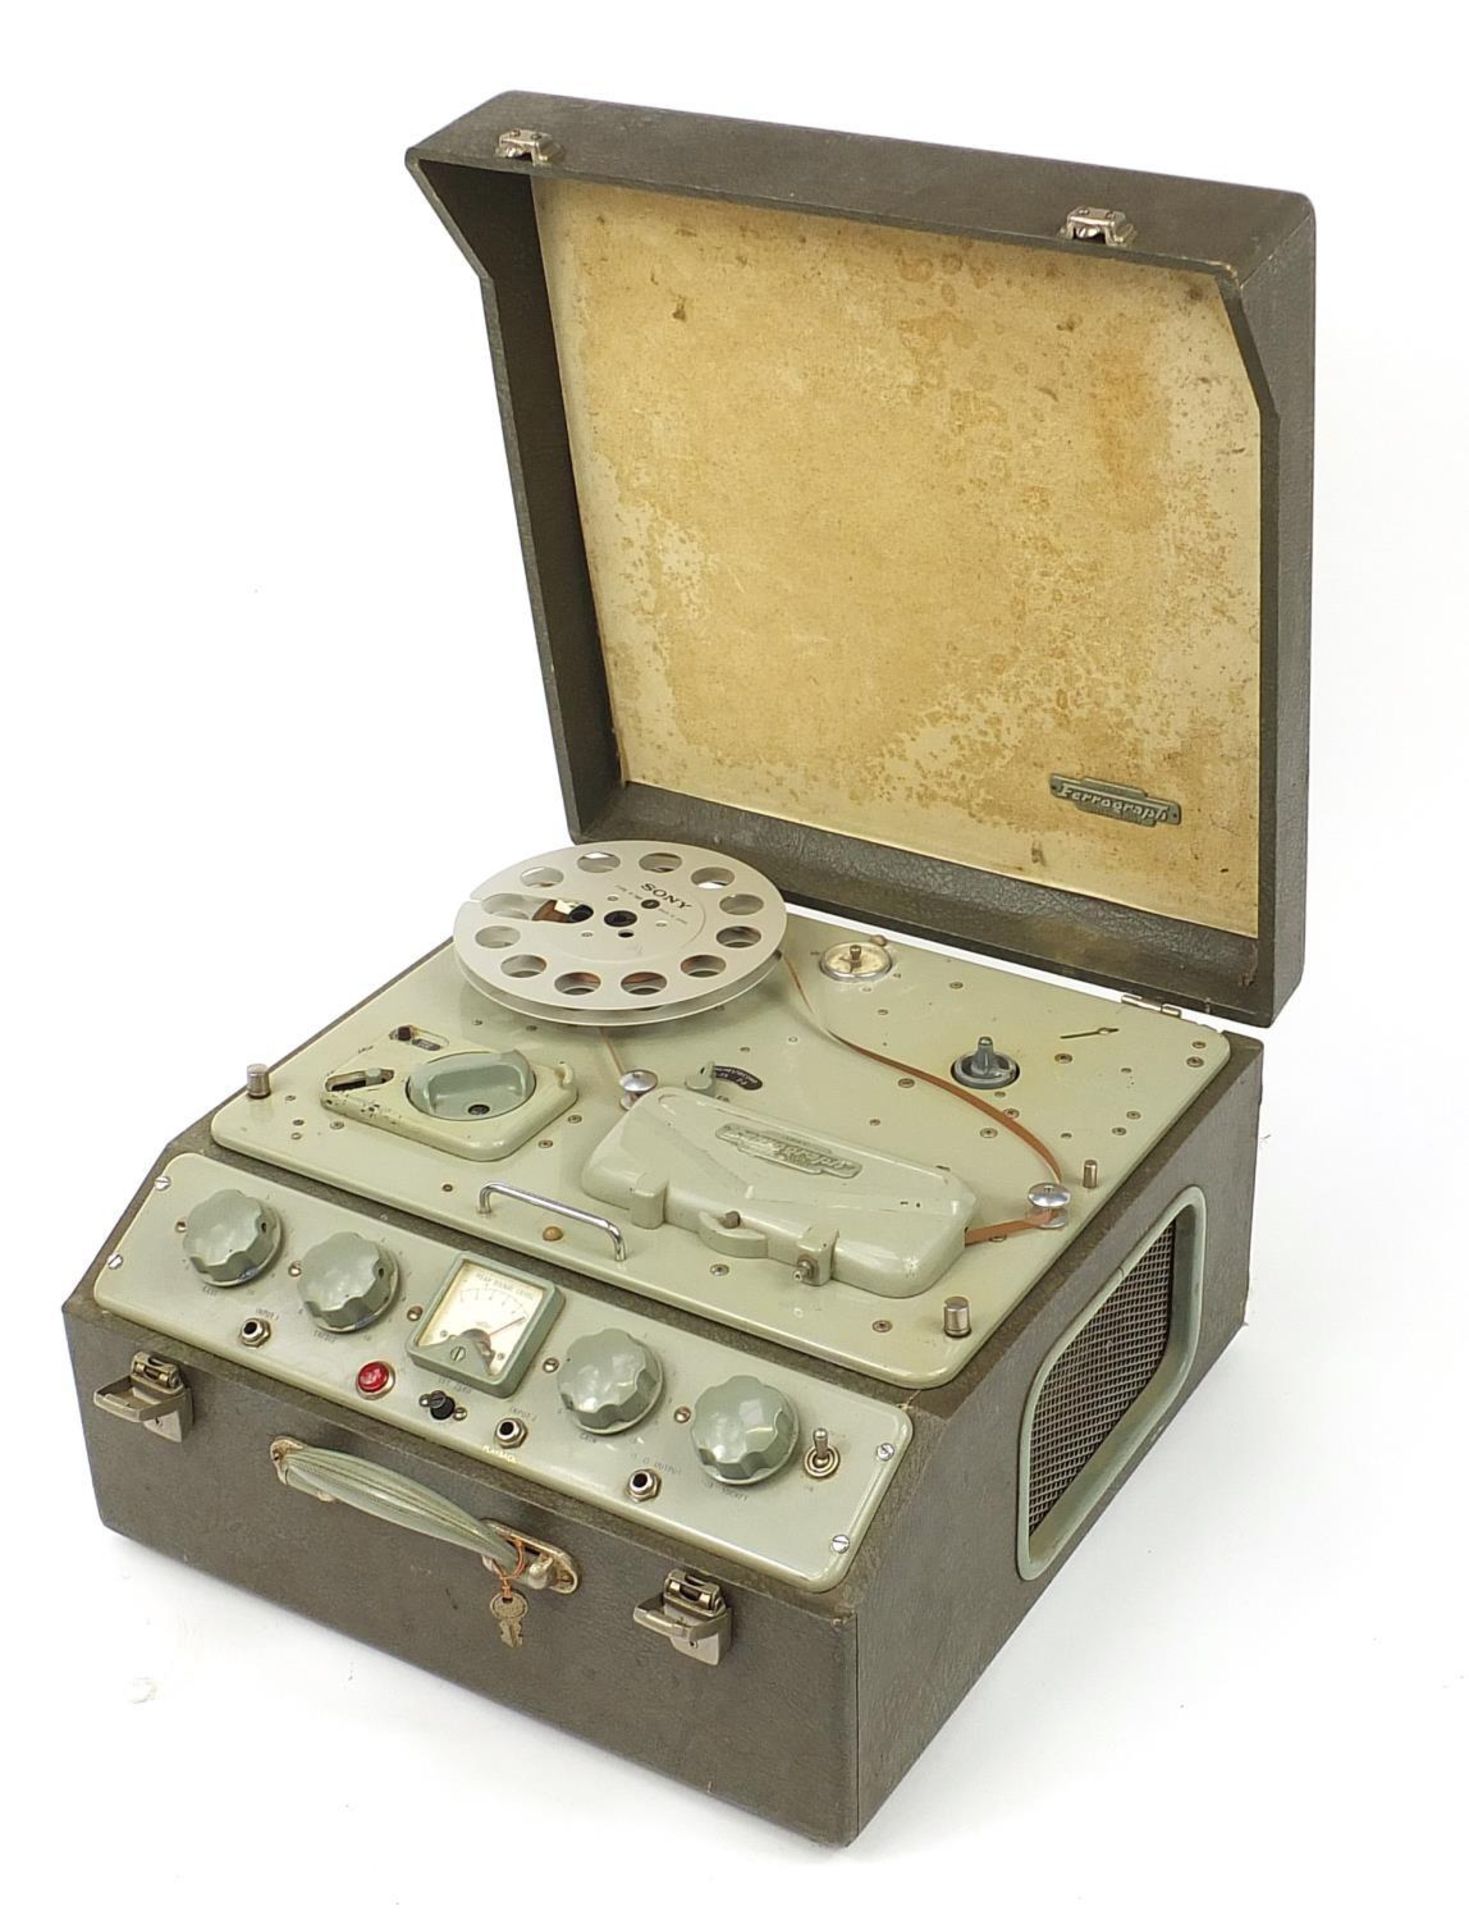 Vintage Ferrograph reel to reel tape recorder, 24.5cm H x 44cm W x 43.5cm deep when closed